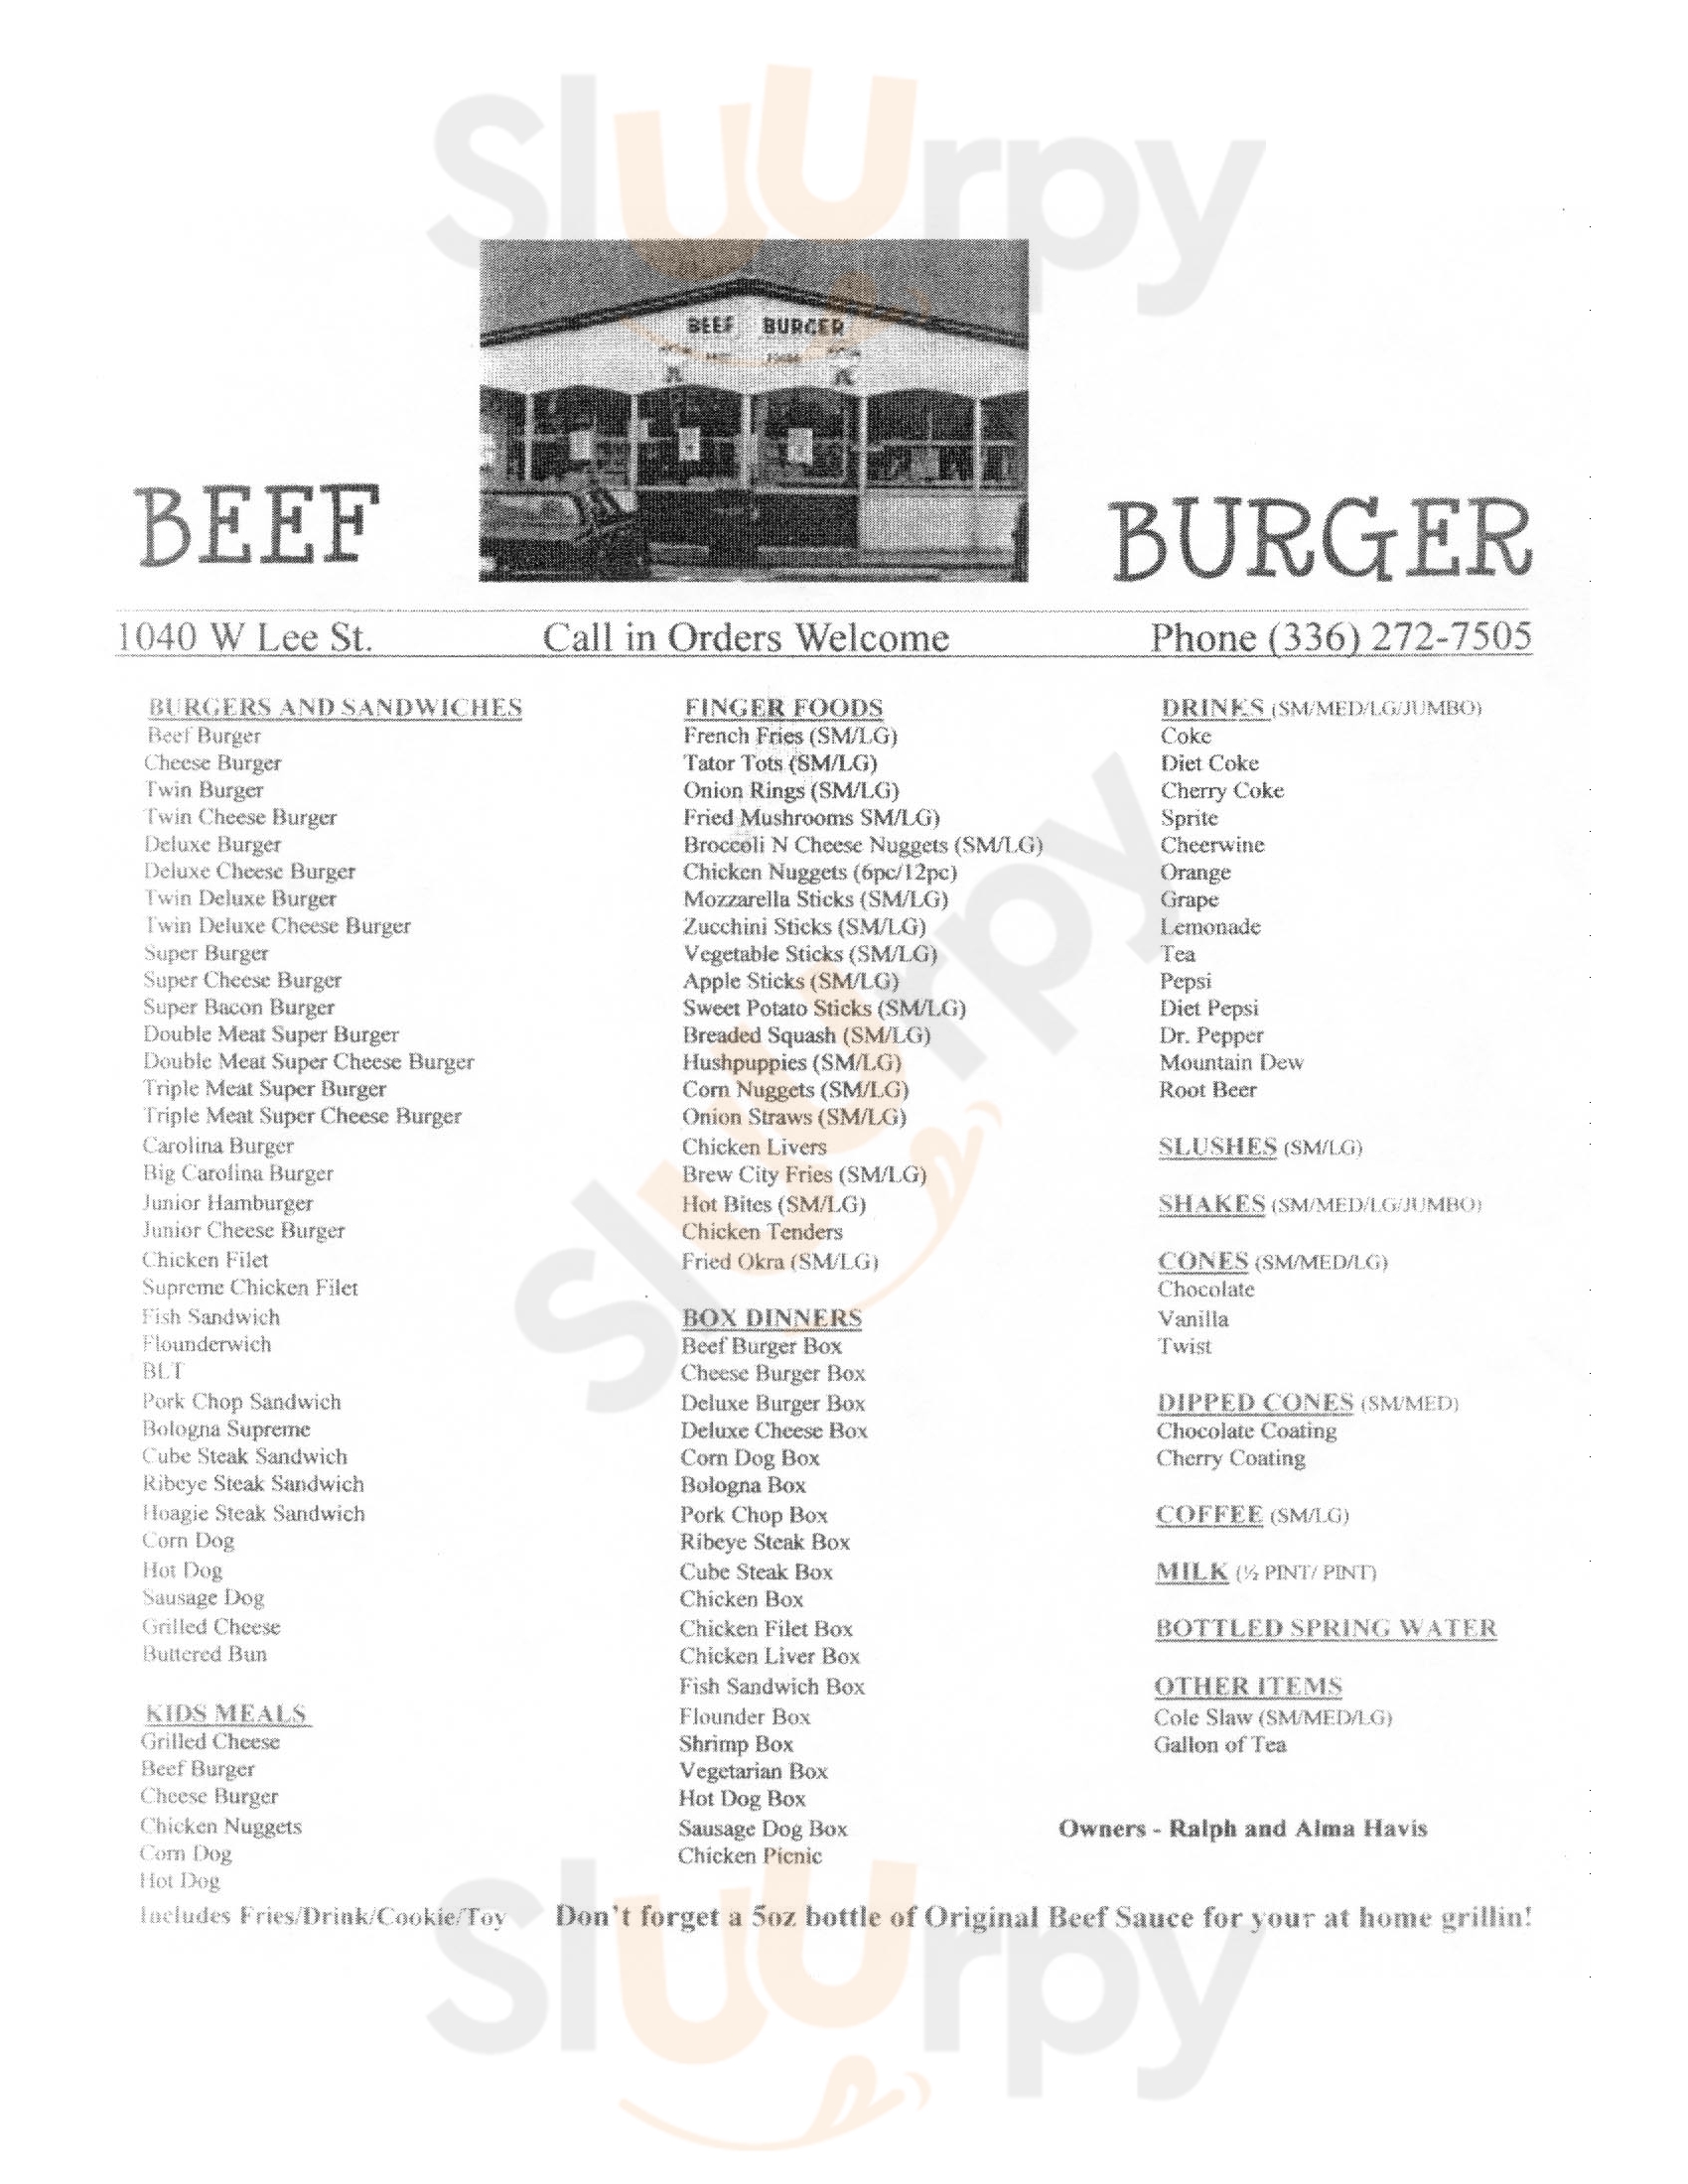 Beef-burger Of Greensboro Incorporated Greensboro Menu - 1